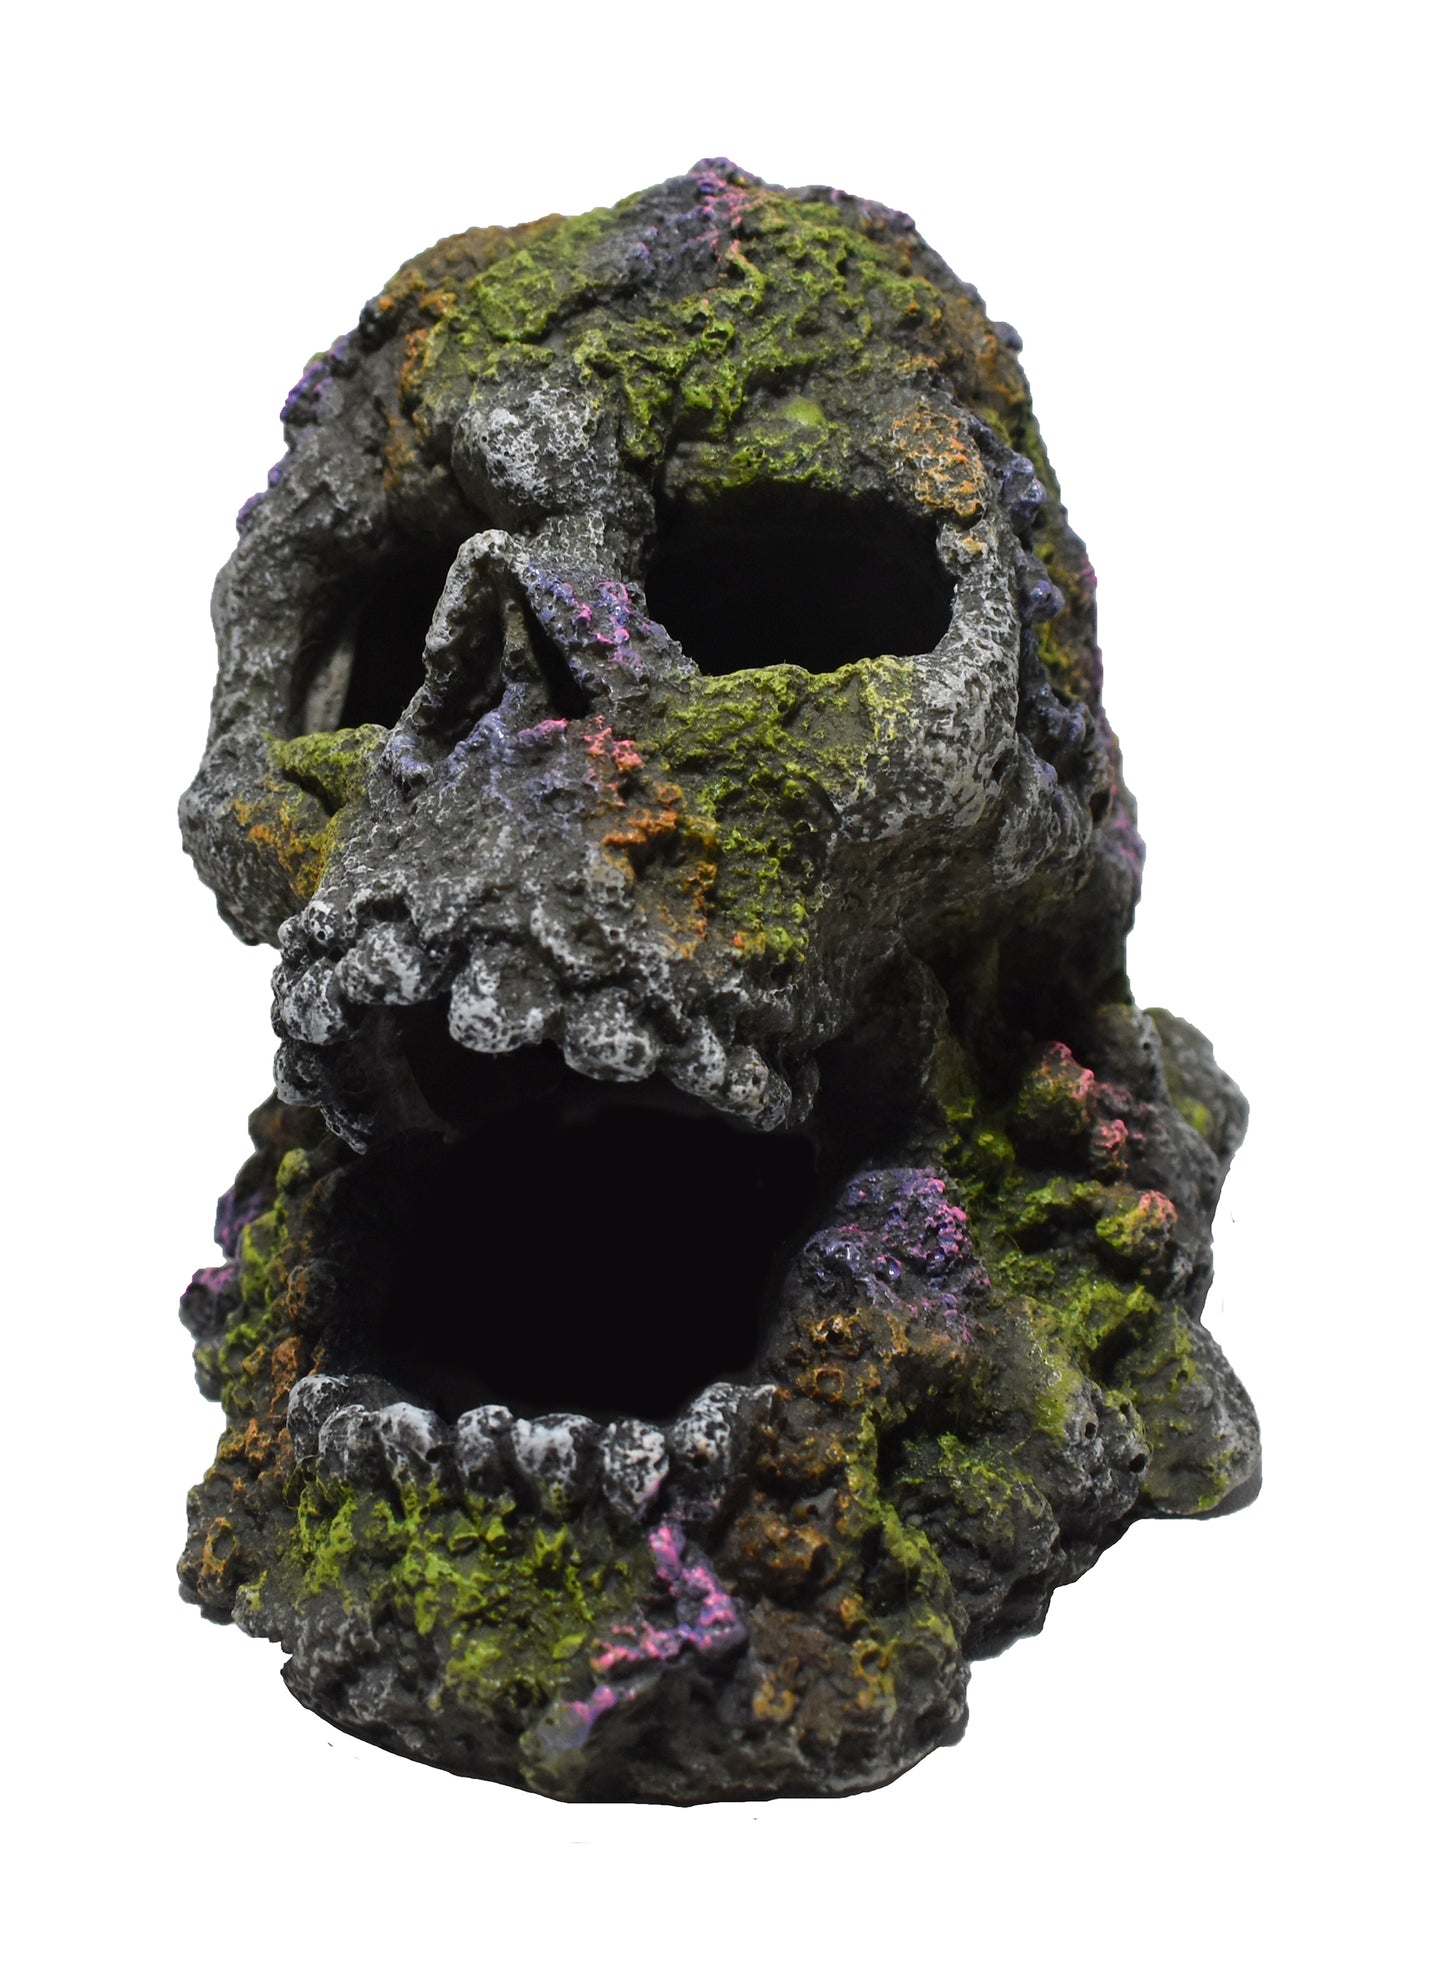 4.1" Mossy Skull Resin Ornament - Map Price $14.49